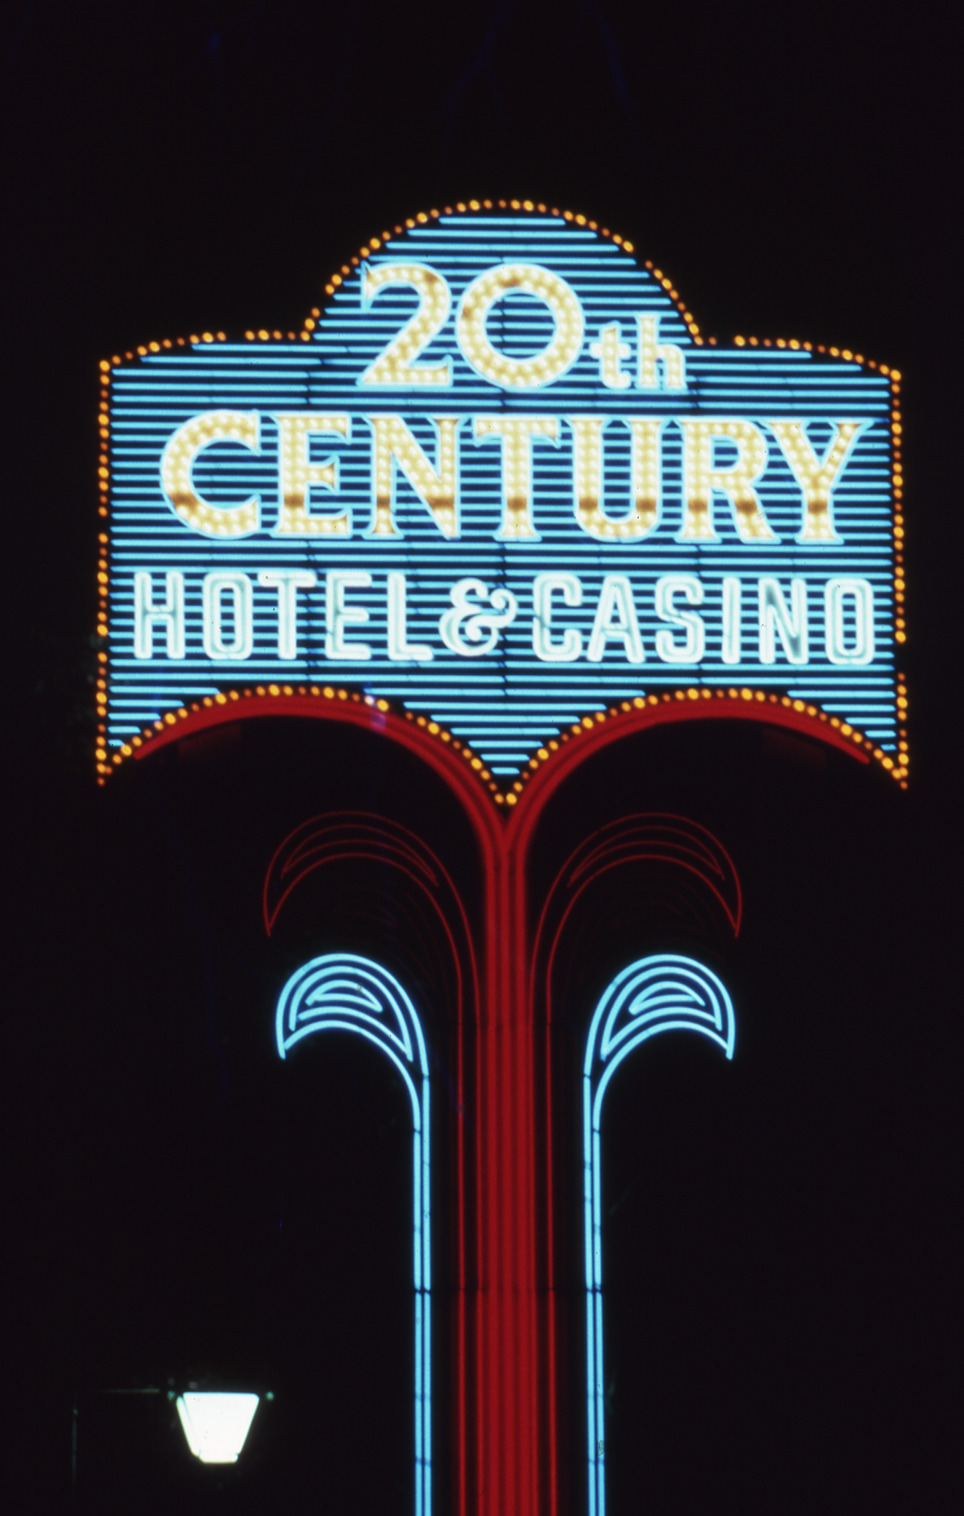 20th Century Hotel pylon sign, Las Vegas, Nevada: photographic print